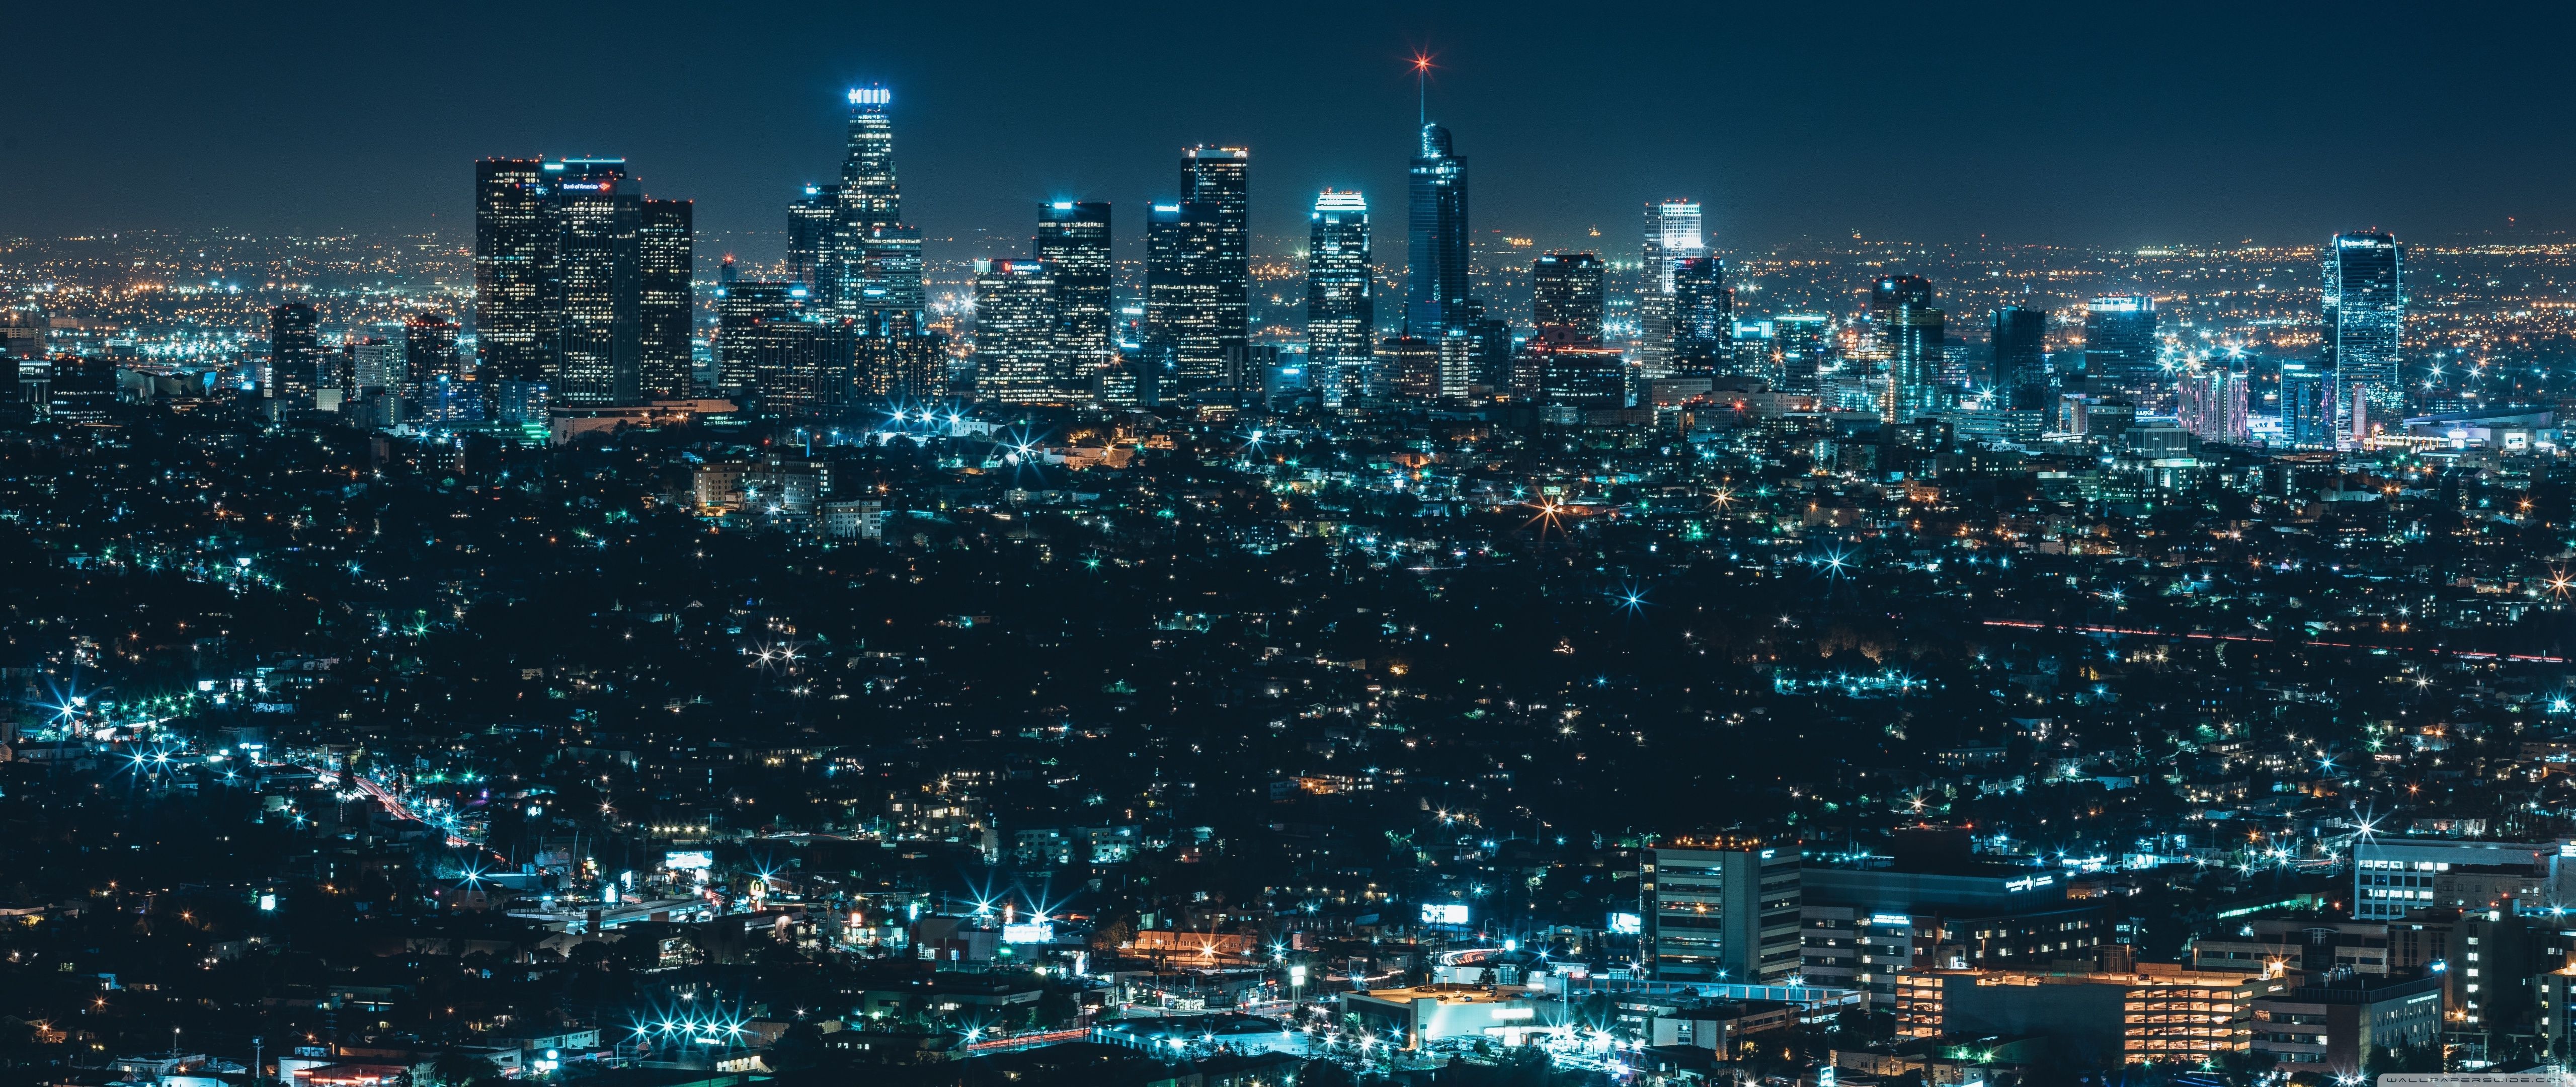 Los Angeles 4k - HD Wallpaper 